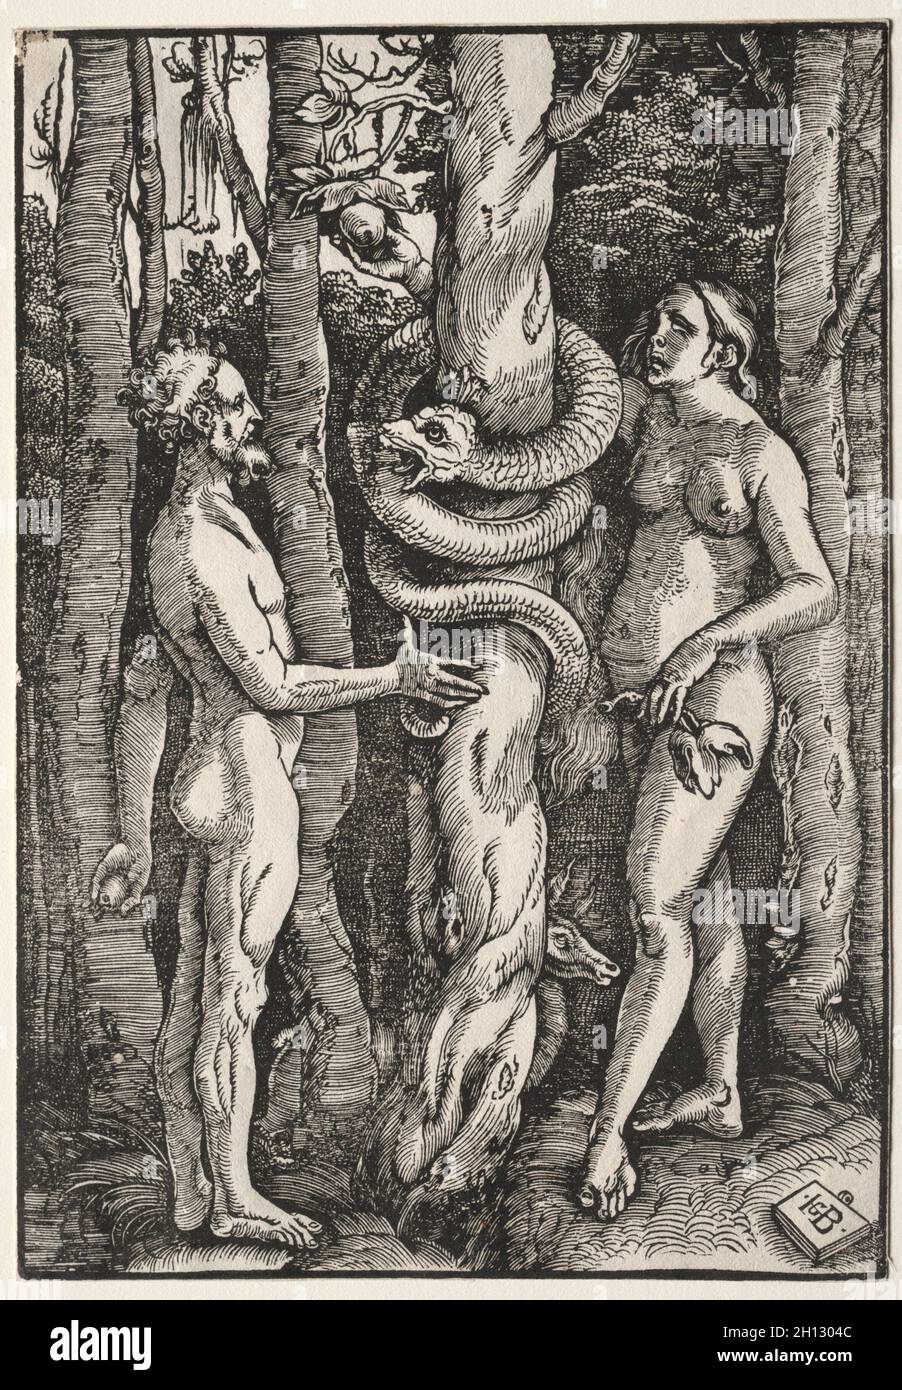 Adam und Eva, c. 1514. Hans Baldung (Deutsch, 1484/85-1545). Holzschnitt; Bild: 22.2 x 15.3 cm (8 3/4 x 6 Zoll); Blatt: 22.2 x 15.3 cm (8 3/4 x 6 Zoll). Stockfoto